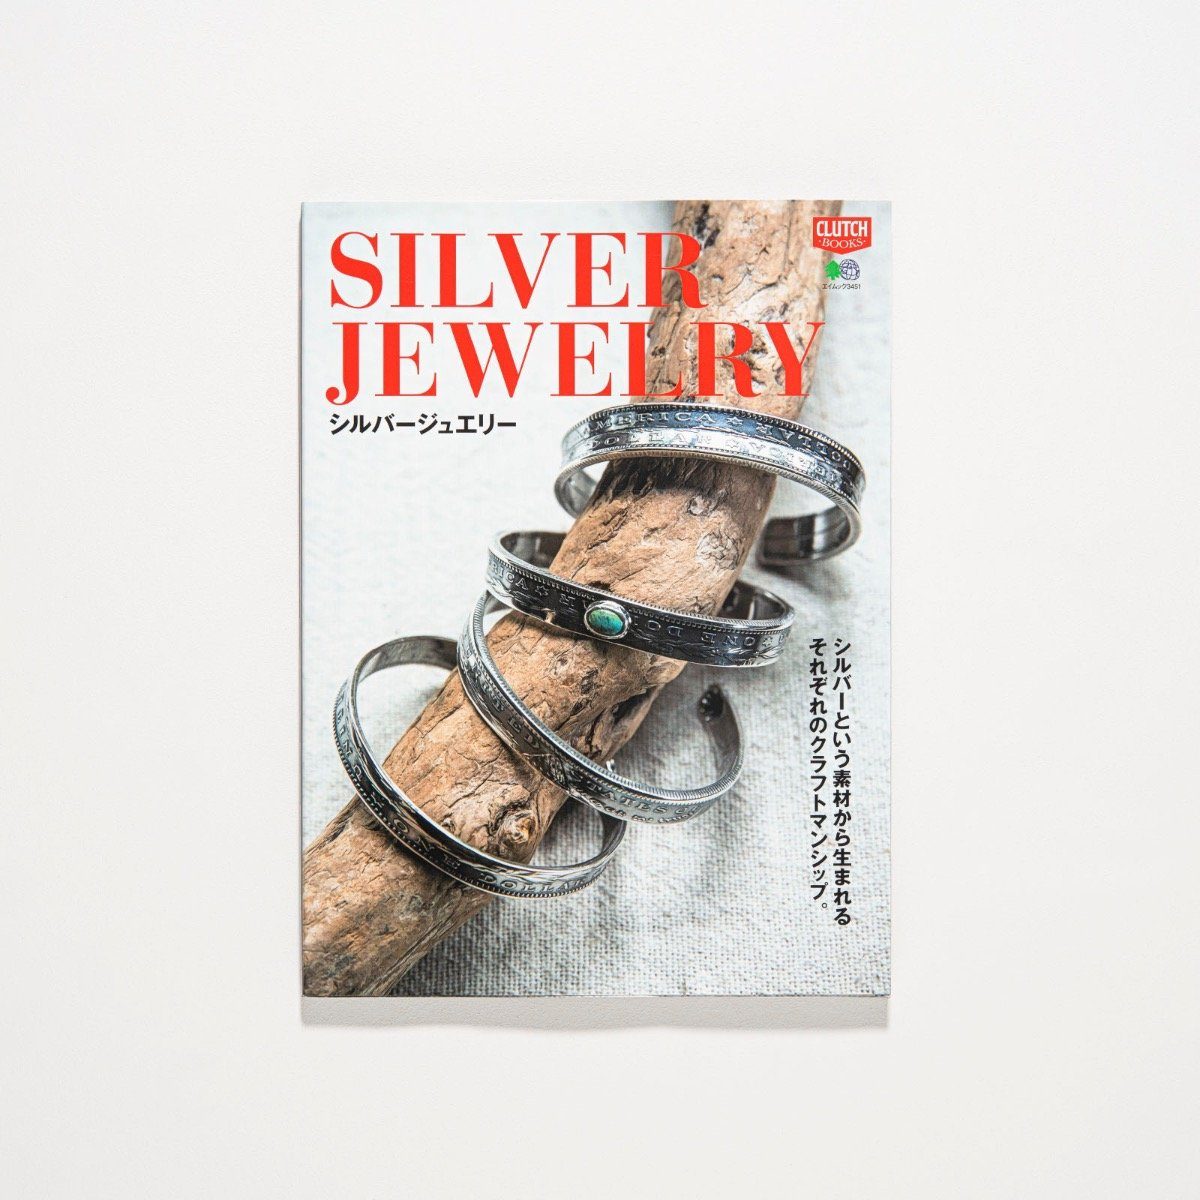 Clutch Books - Silver Jewelry